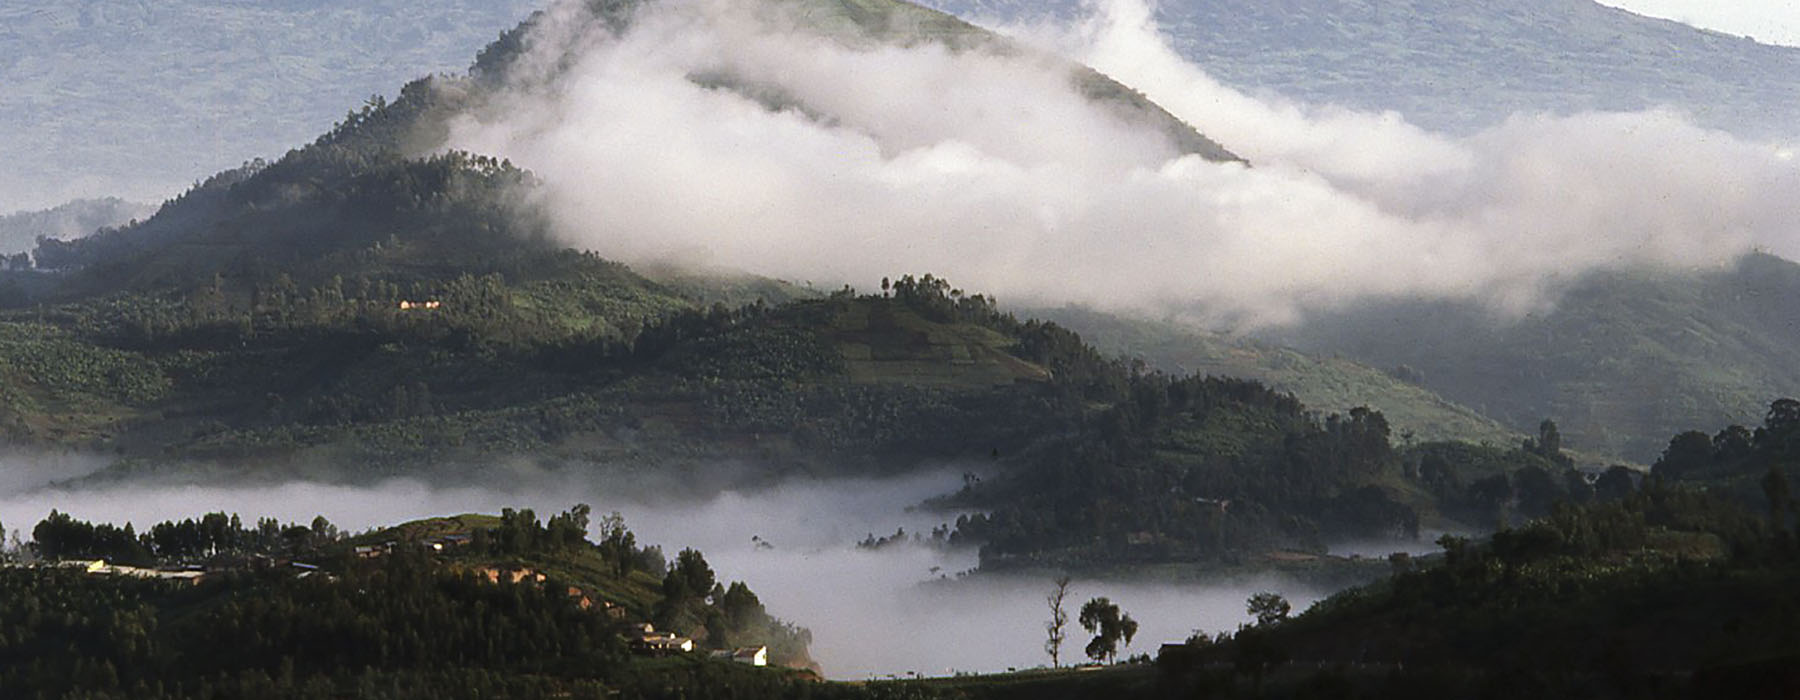 Rwanda<br class="hidden-md hidden-lg" /> Safari Holidays